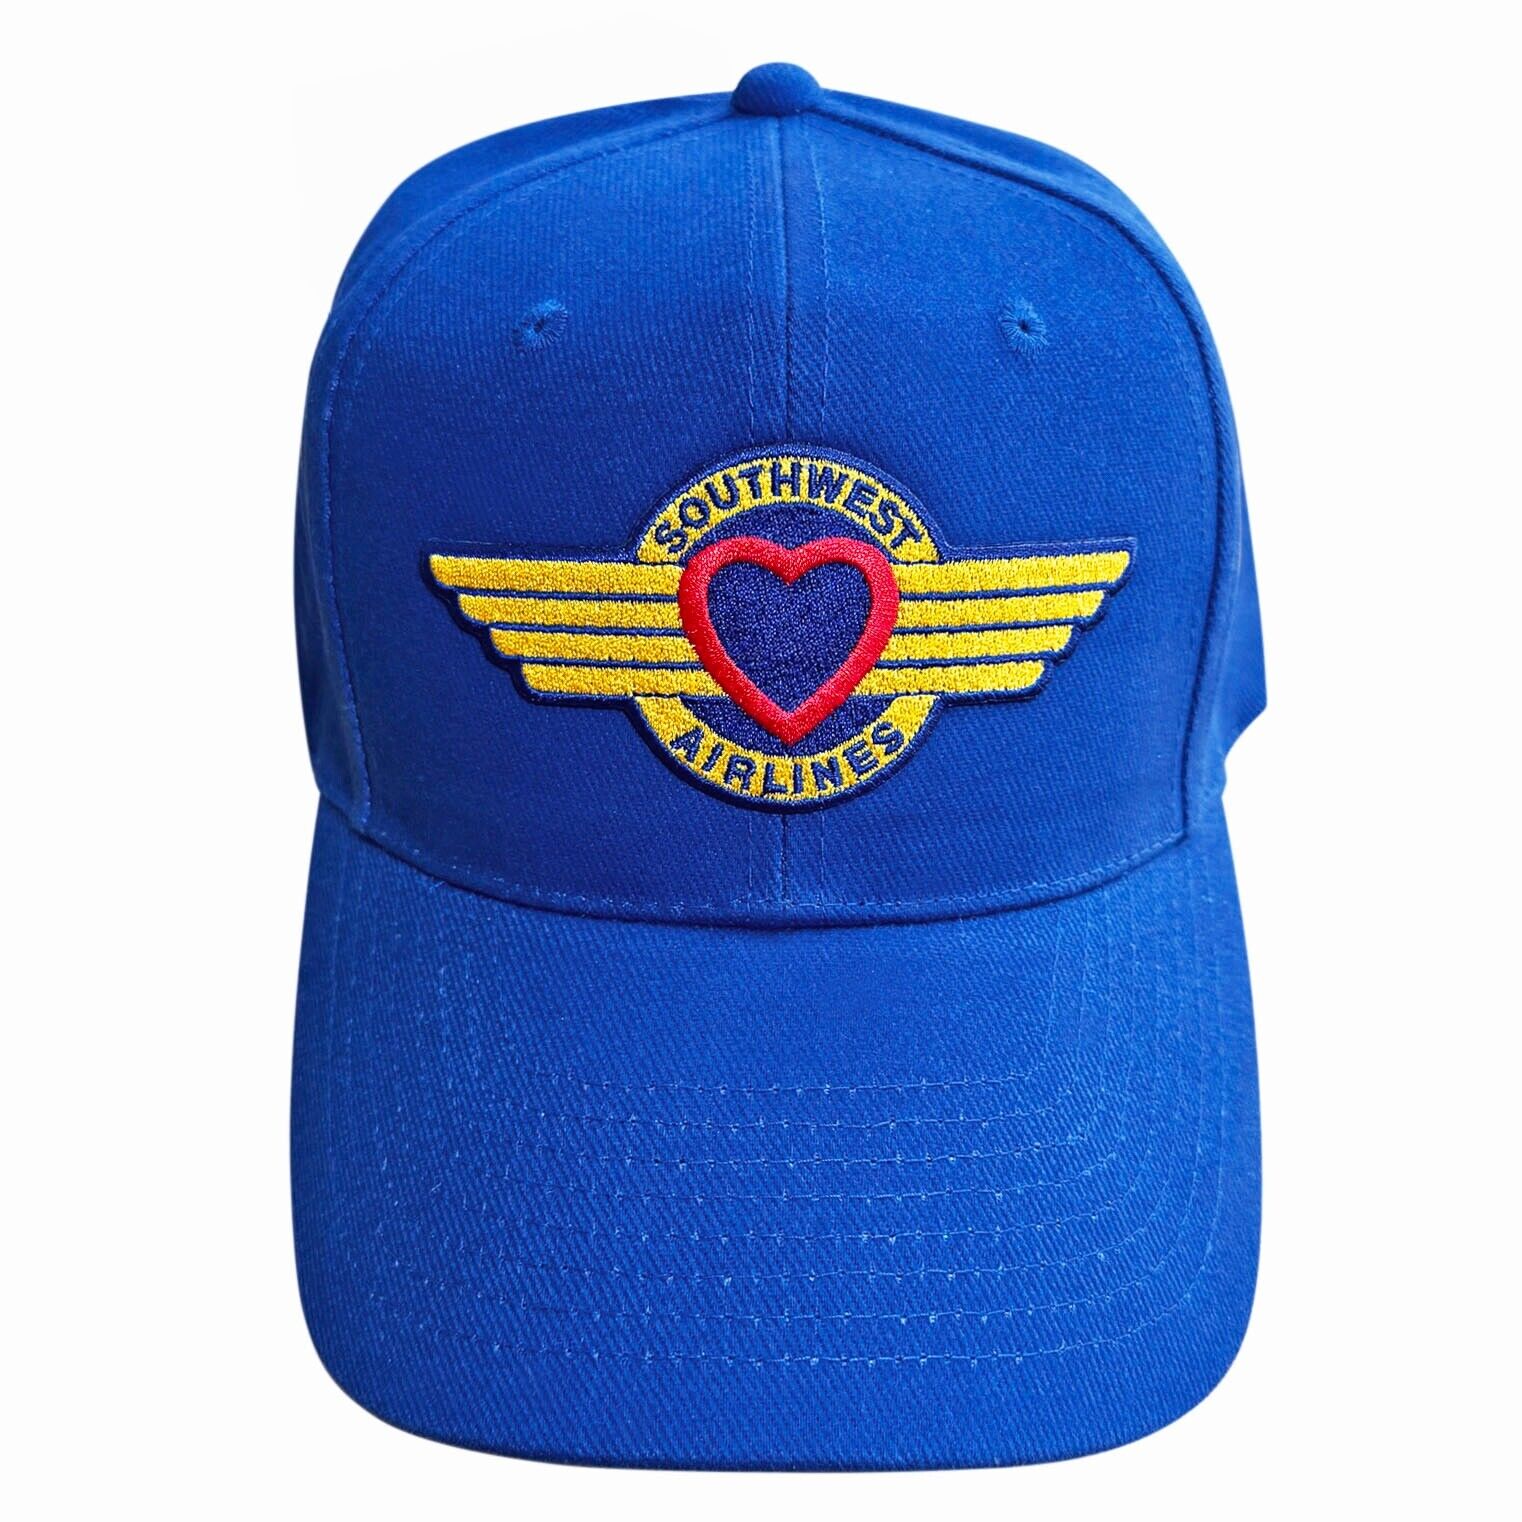 Classic Look SOUTHWEST AIRLINES CREW CAP Brand New, Unworn, Collectible